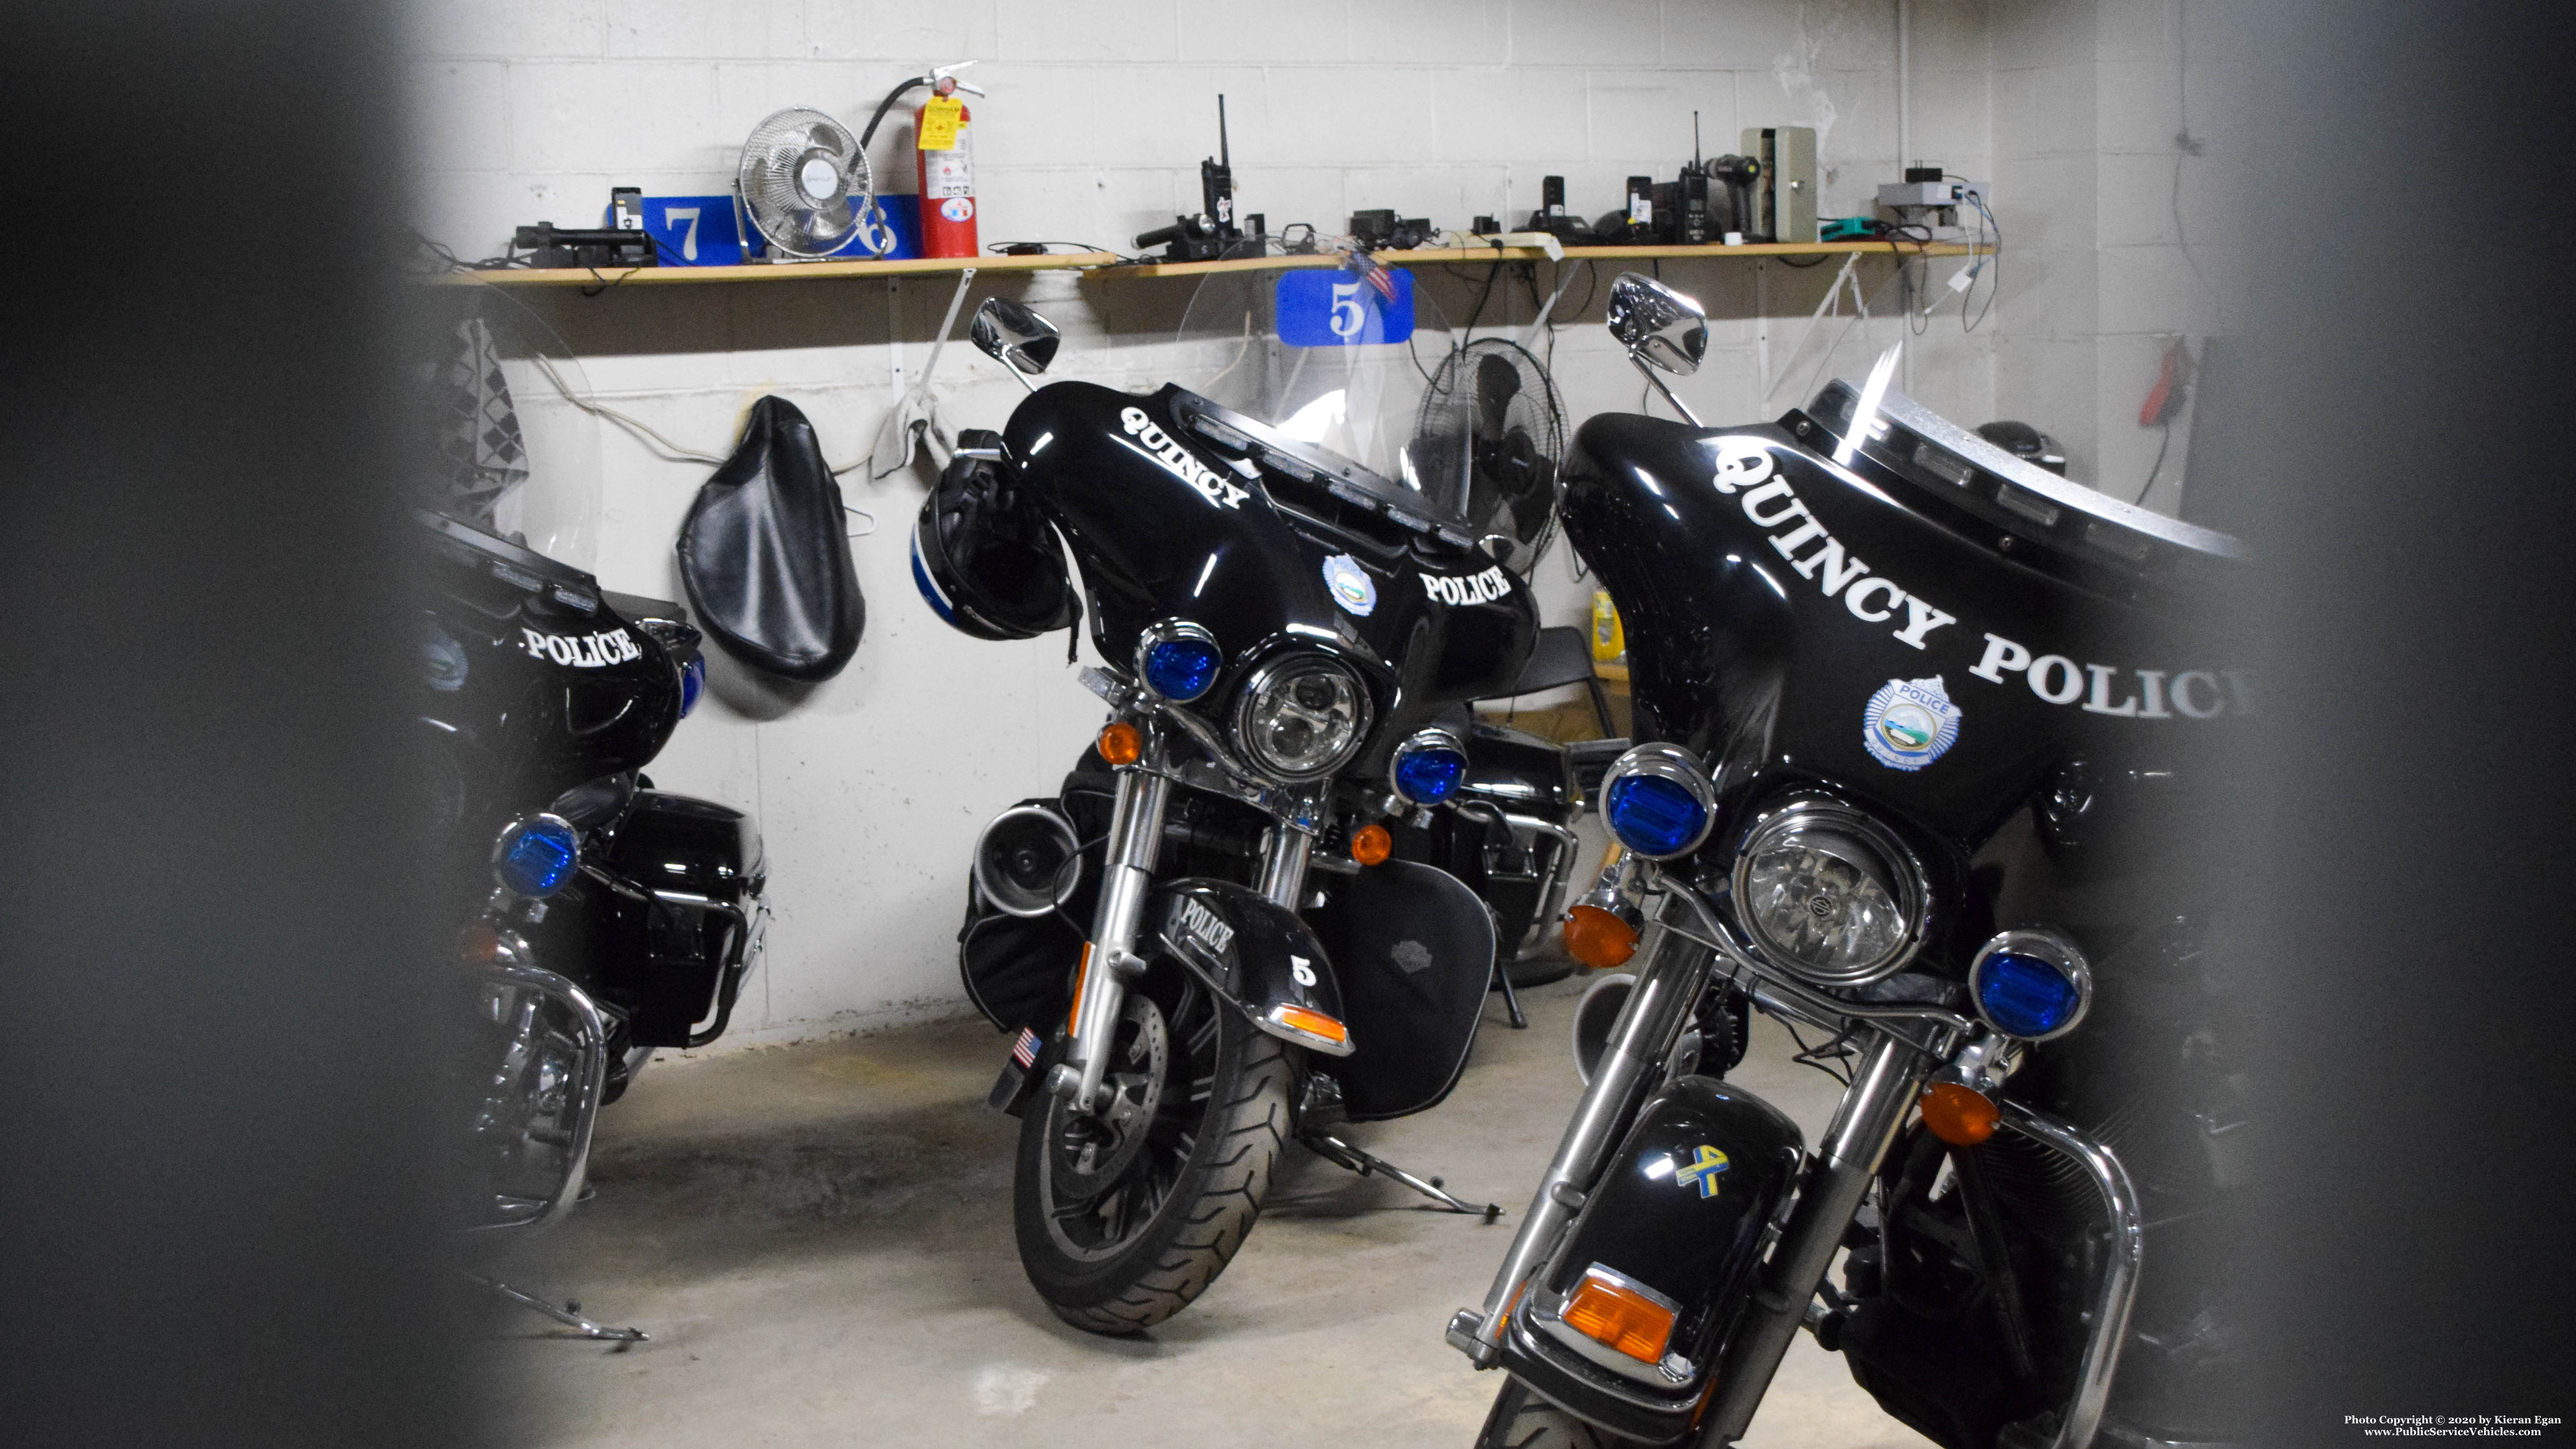 A photo  of Quincy Police
            Motorcycle 5, a 2010-2020 Harley Davidson Electra Glide             taken by Kieran Egan